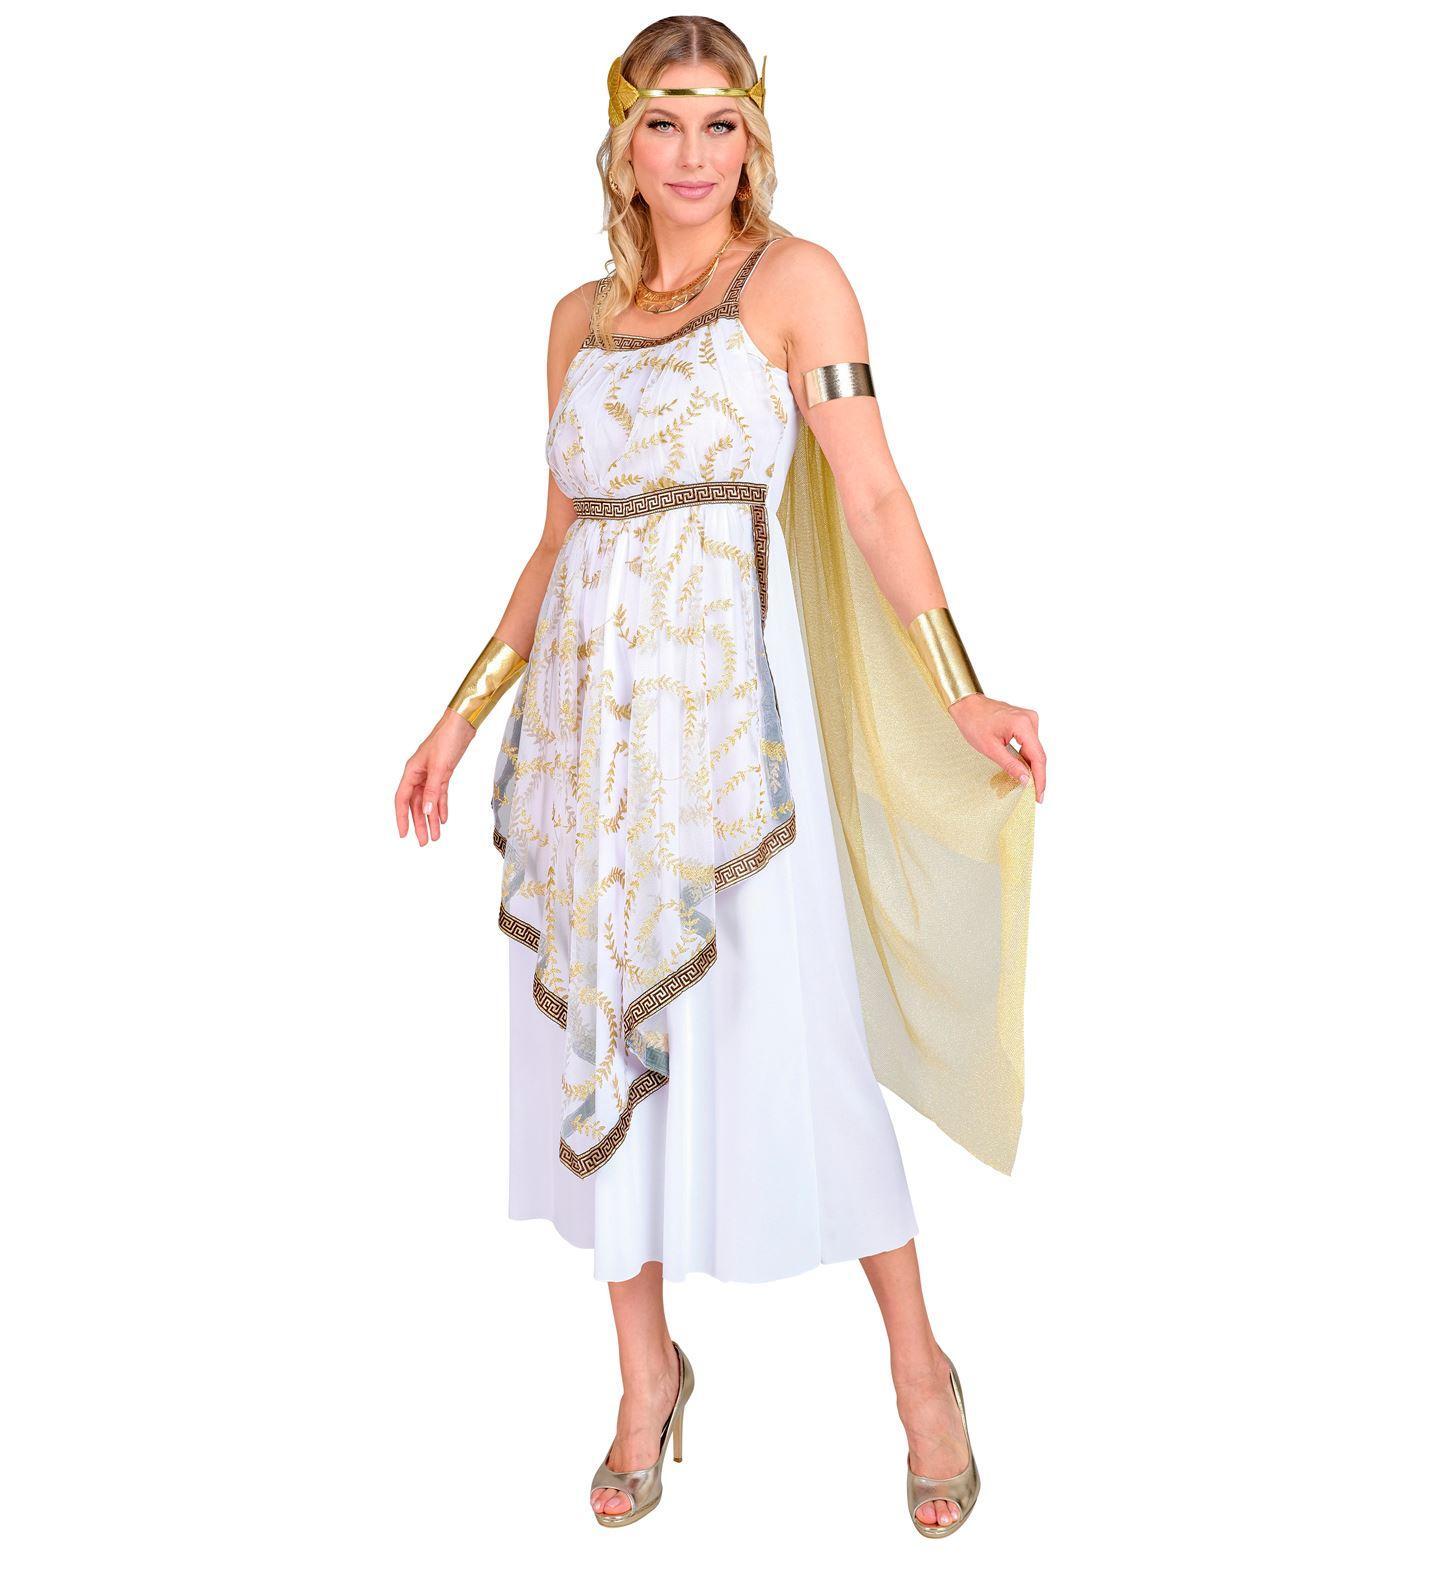 Griekse Godin Outfit voor Dames